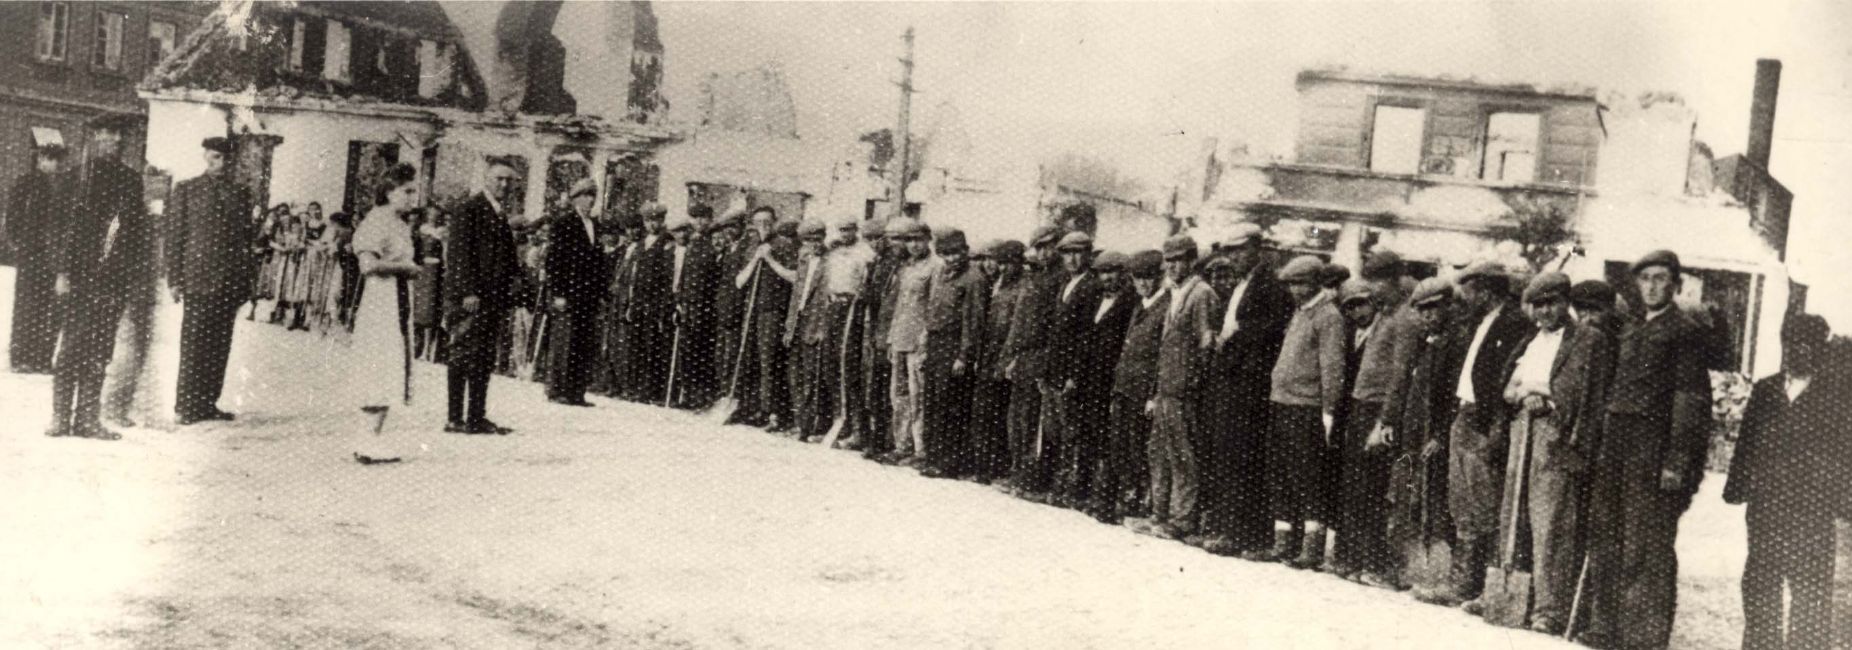 Poland, Uniejow יהודים מרוכזים בכיכר העיר לעבודות כפייה, 1940 לערך. ארכיון יד ושם, 6249